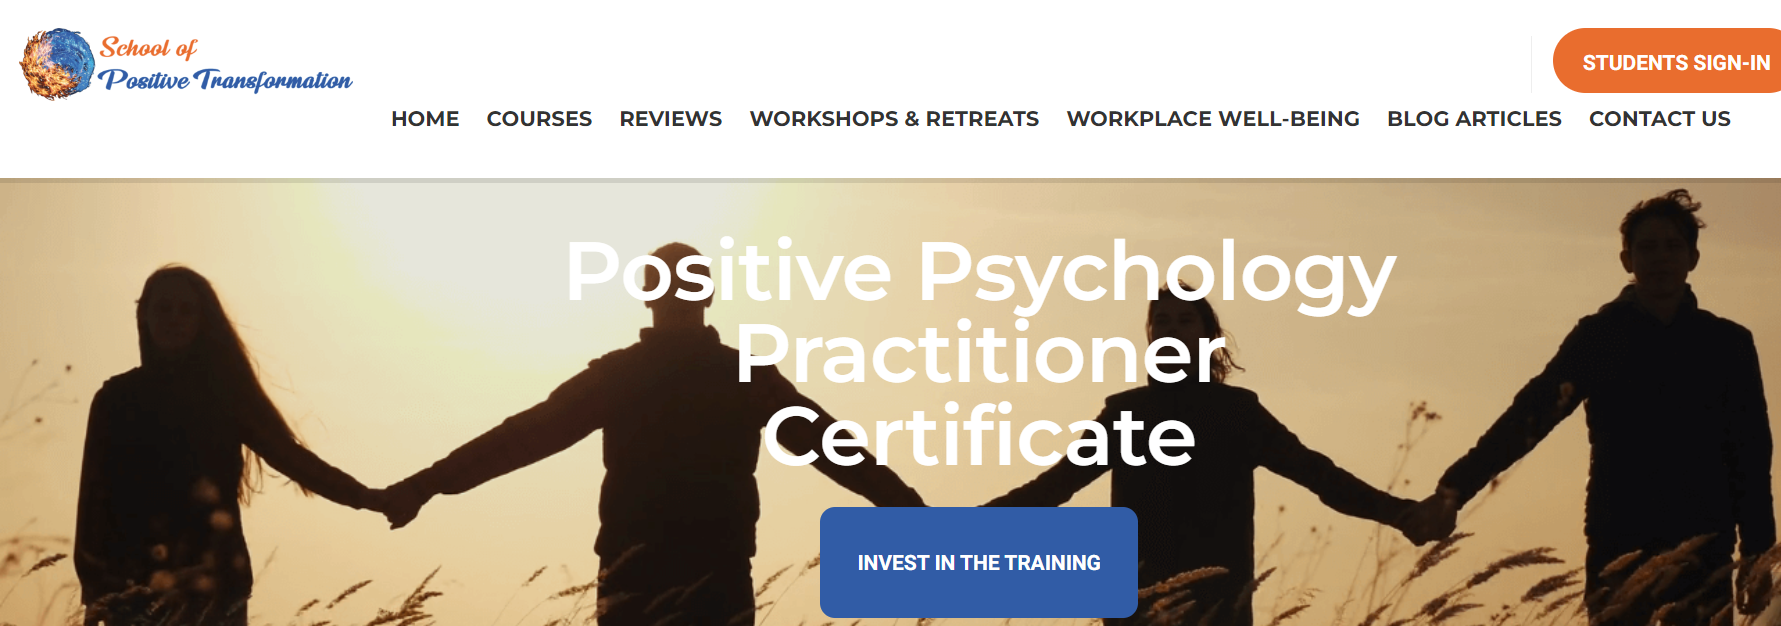 Positive Psychology Practitioner Certificate (School of Positive Transformation)